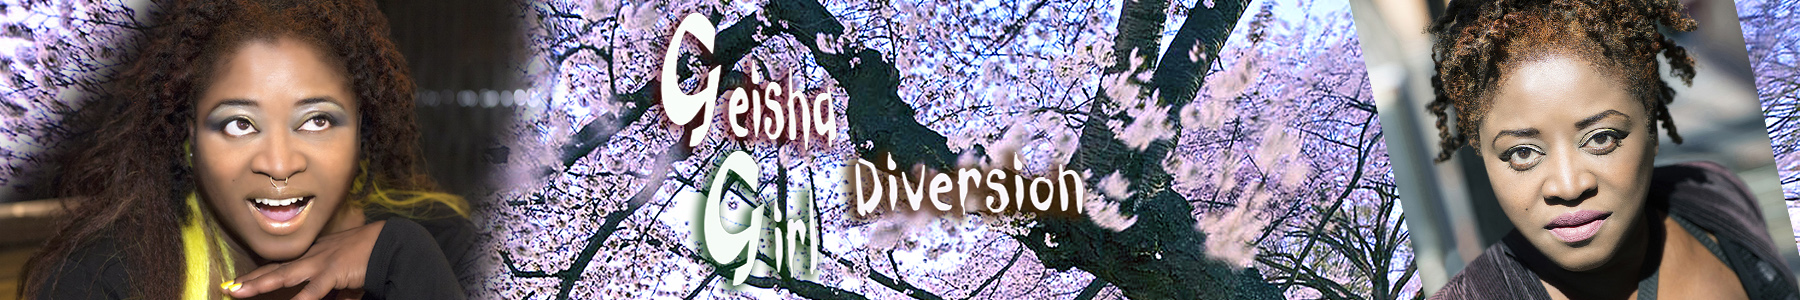 Geisha Girl Diversion